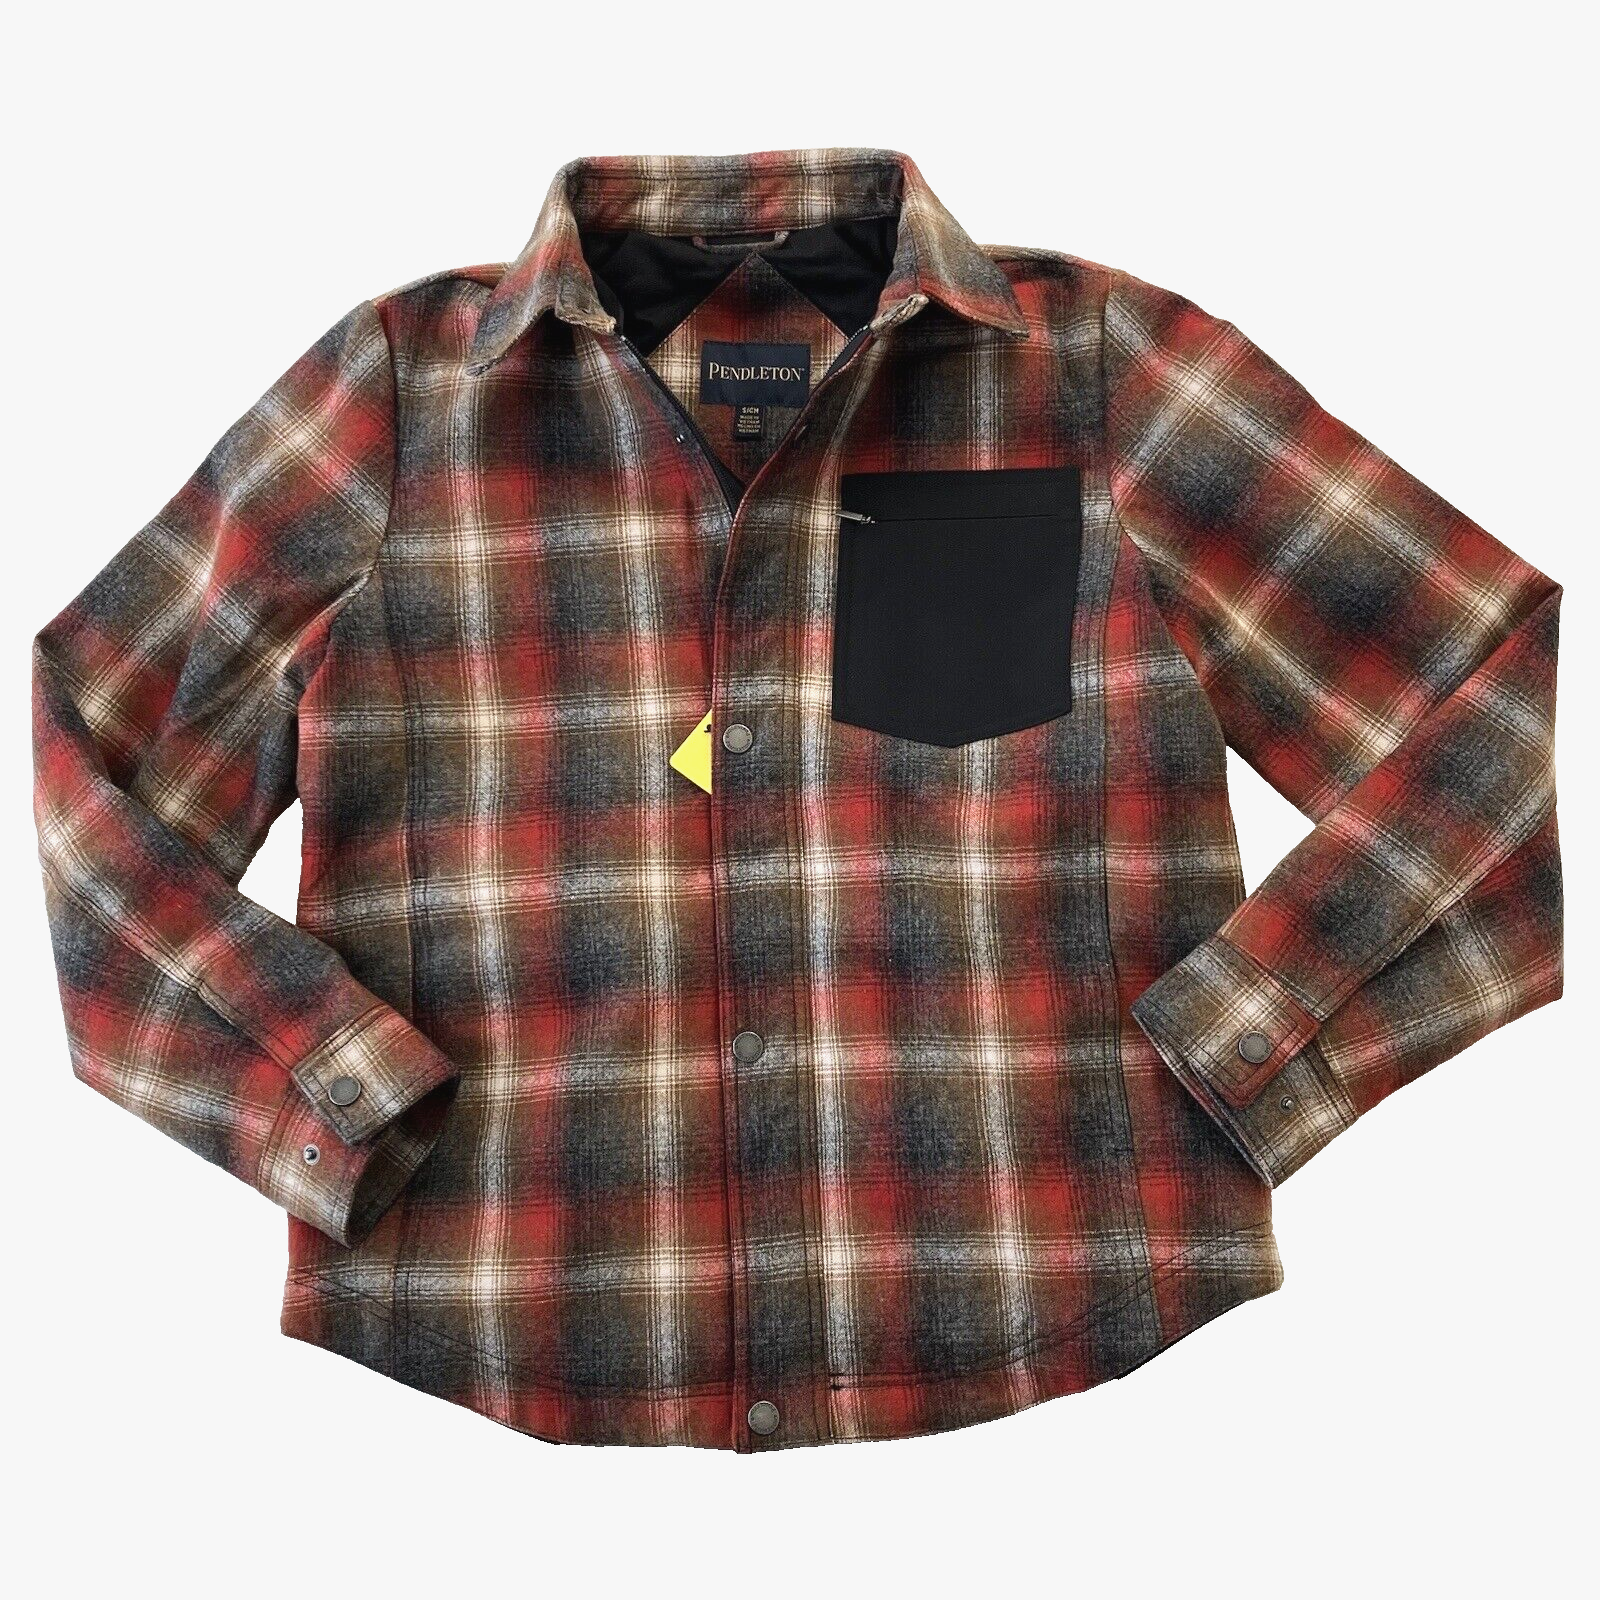 Pendleton Mens Two-Layer Wool Blend Shirt Jacket Red S